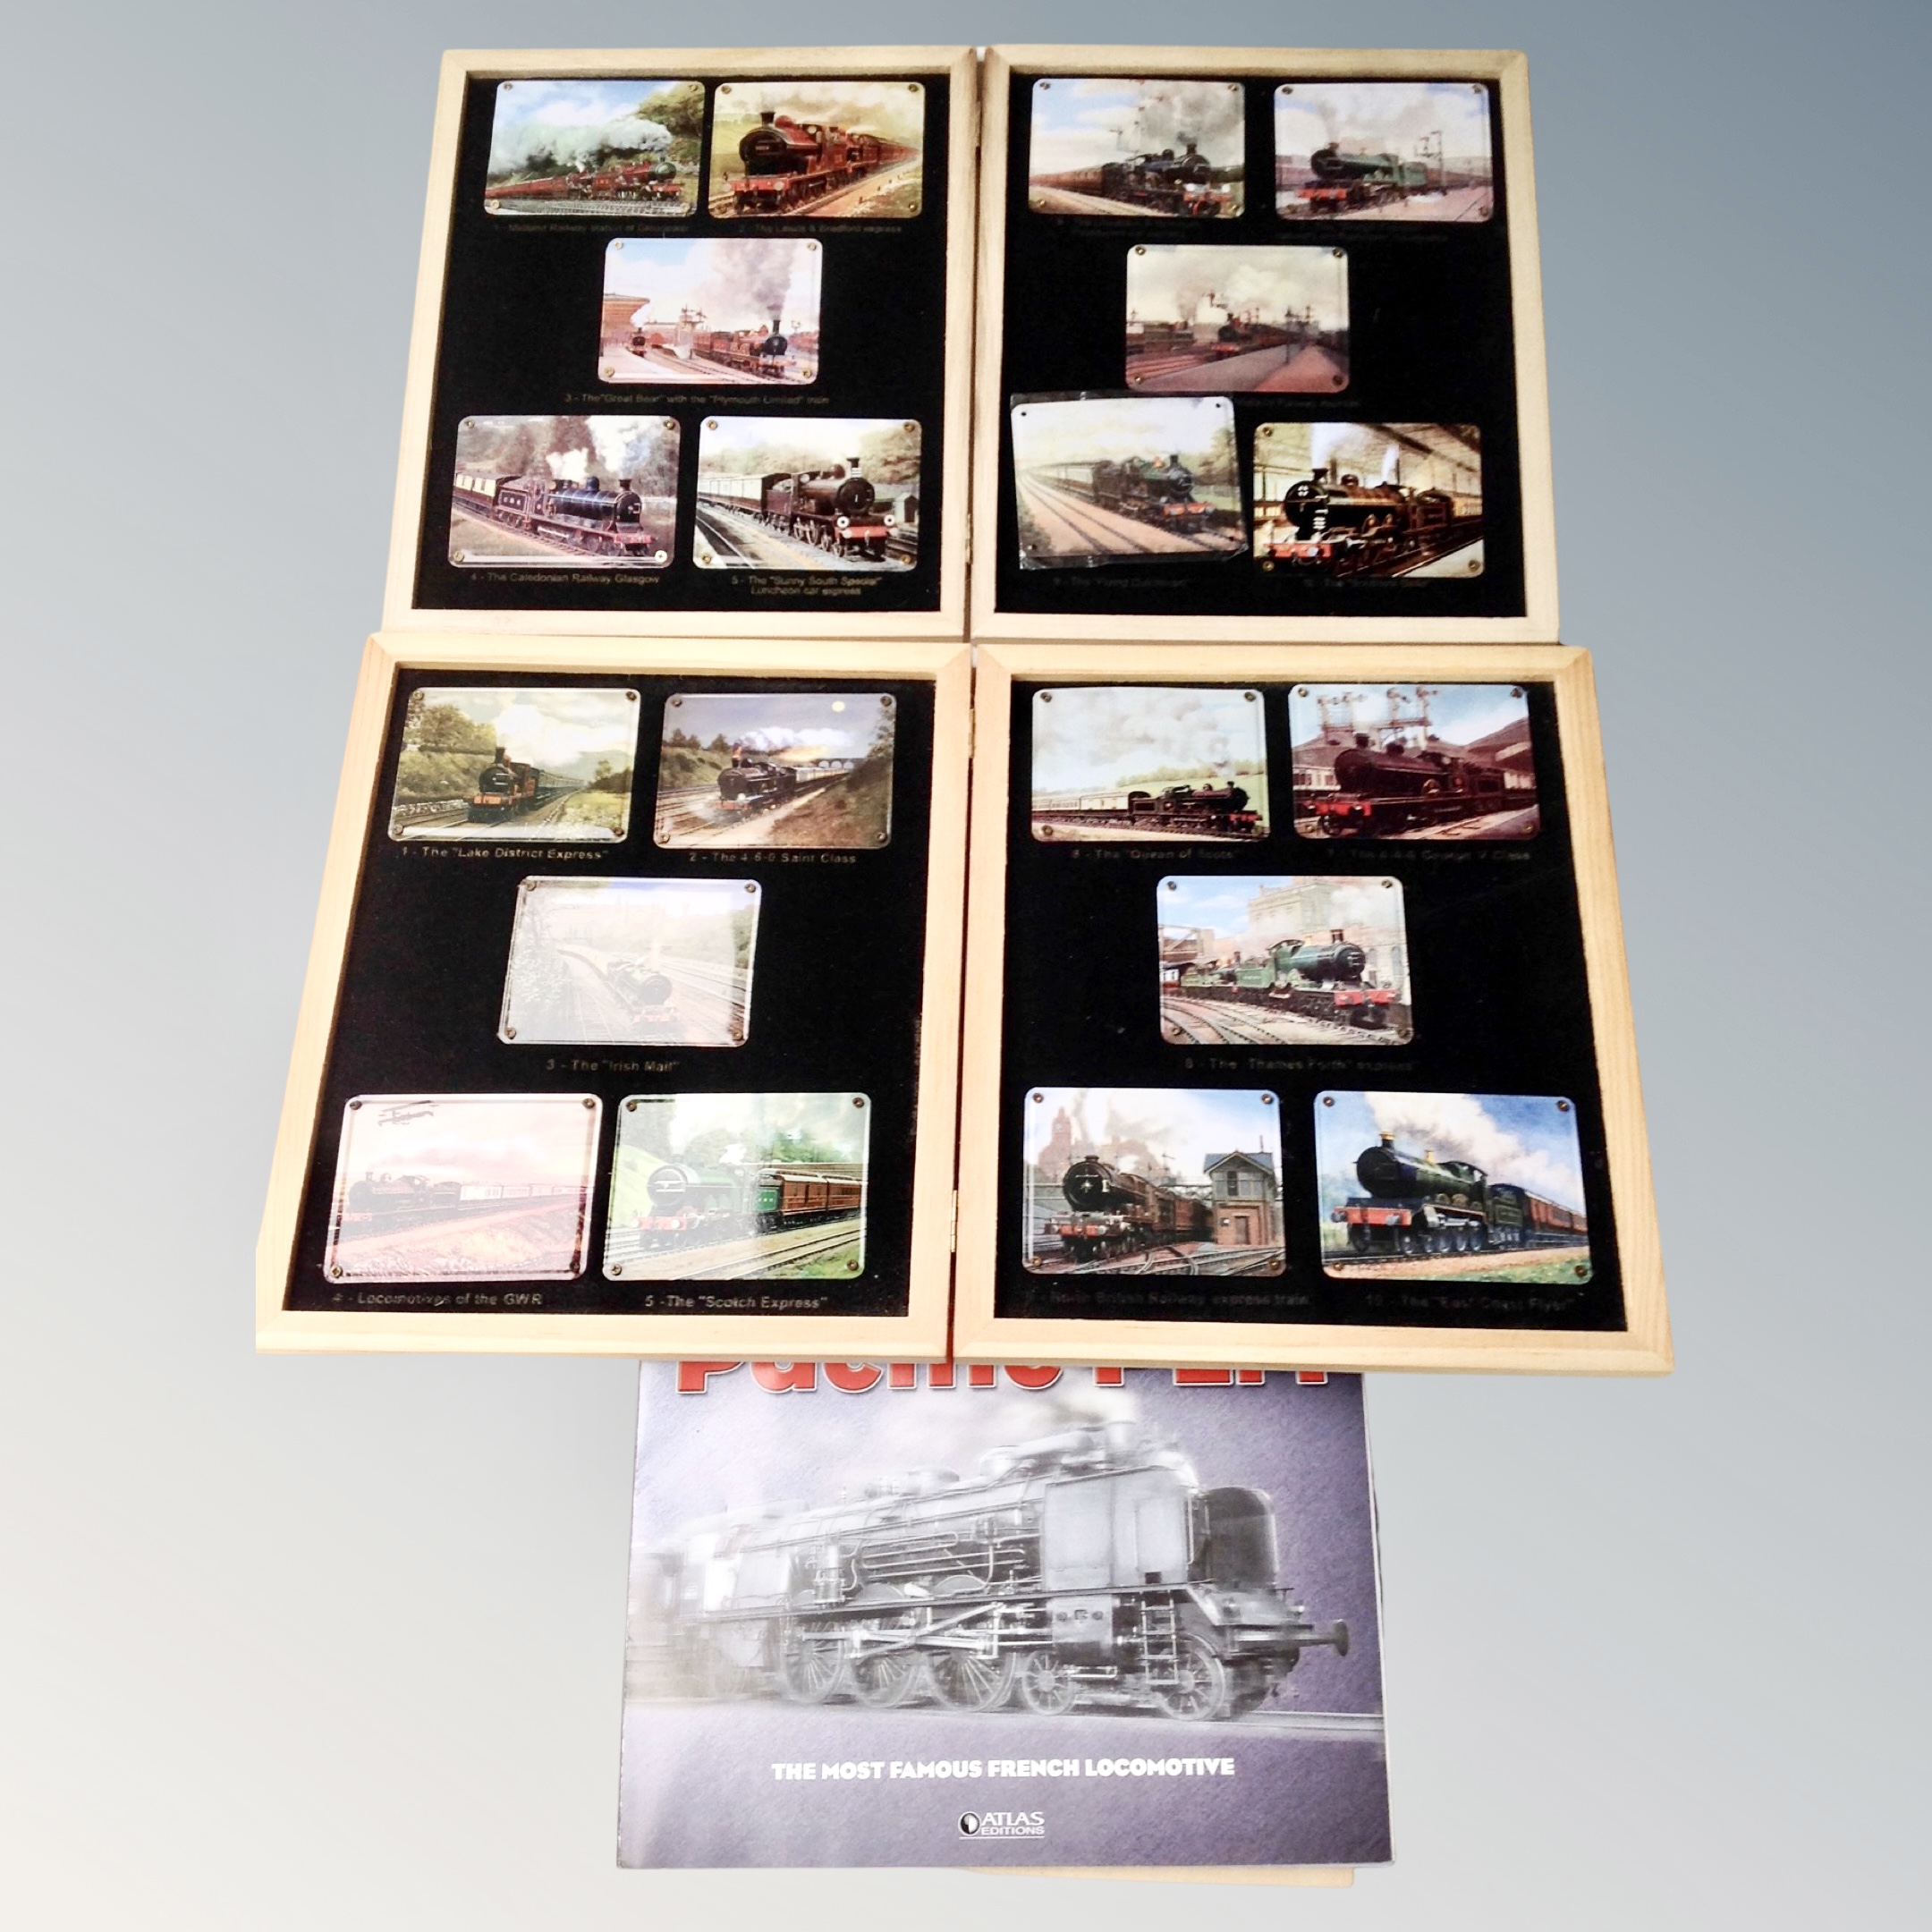 A collection of model train locomotives on plinths, prints of locomotives, etc. - Image 3 of 3